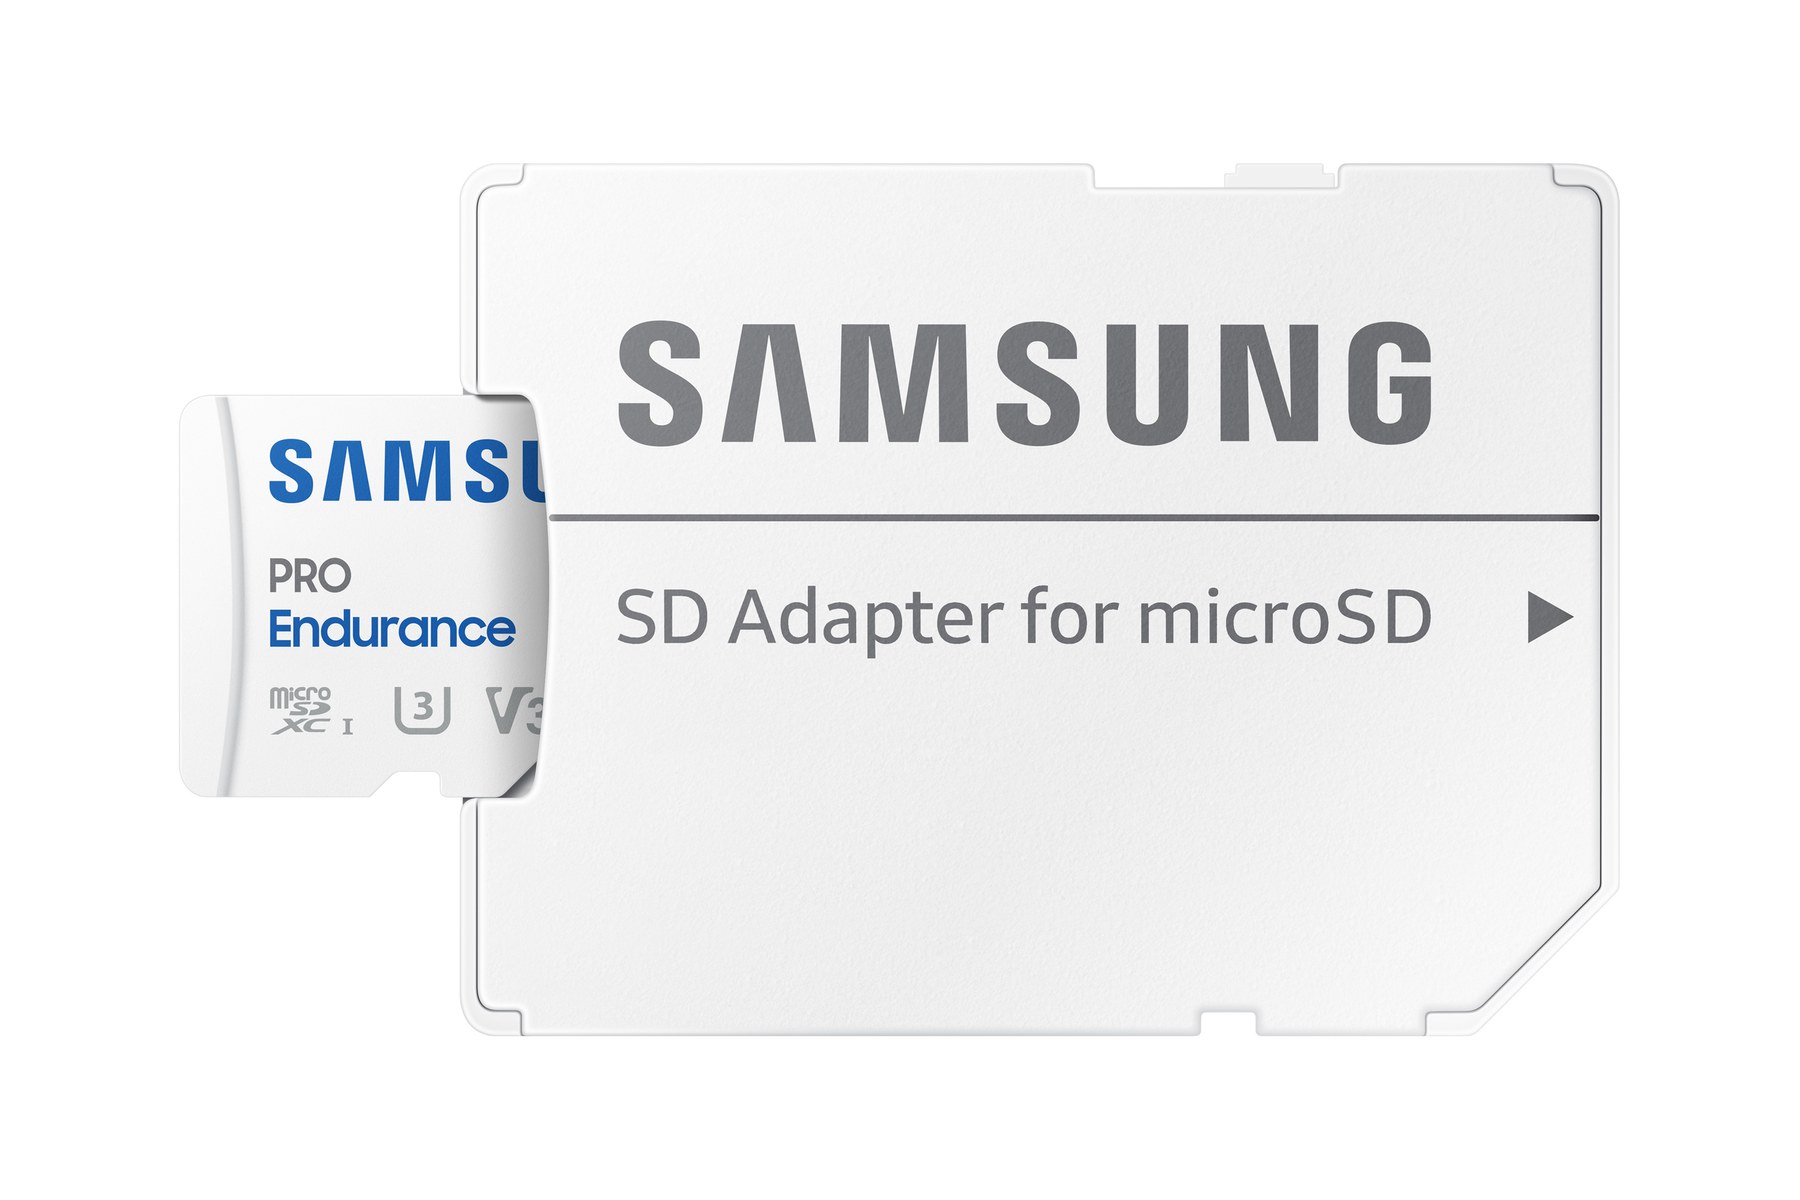 Micro-SDXC 100 128GB, PRO ENDURANCE MB-MJ128KA/EU GB, Speicherkarte, 128 SAMSUNG MB/s